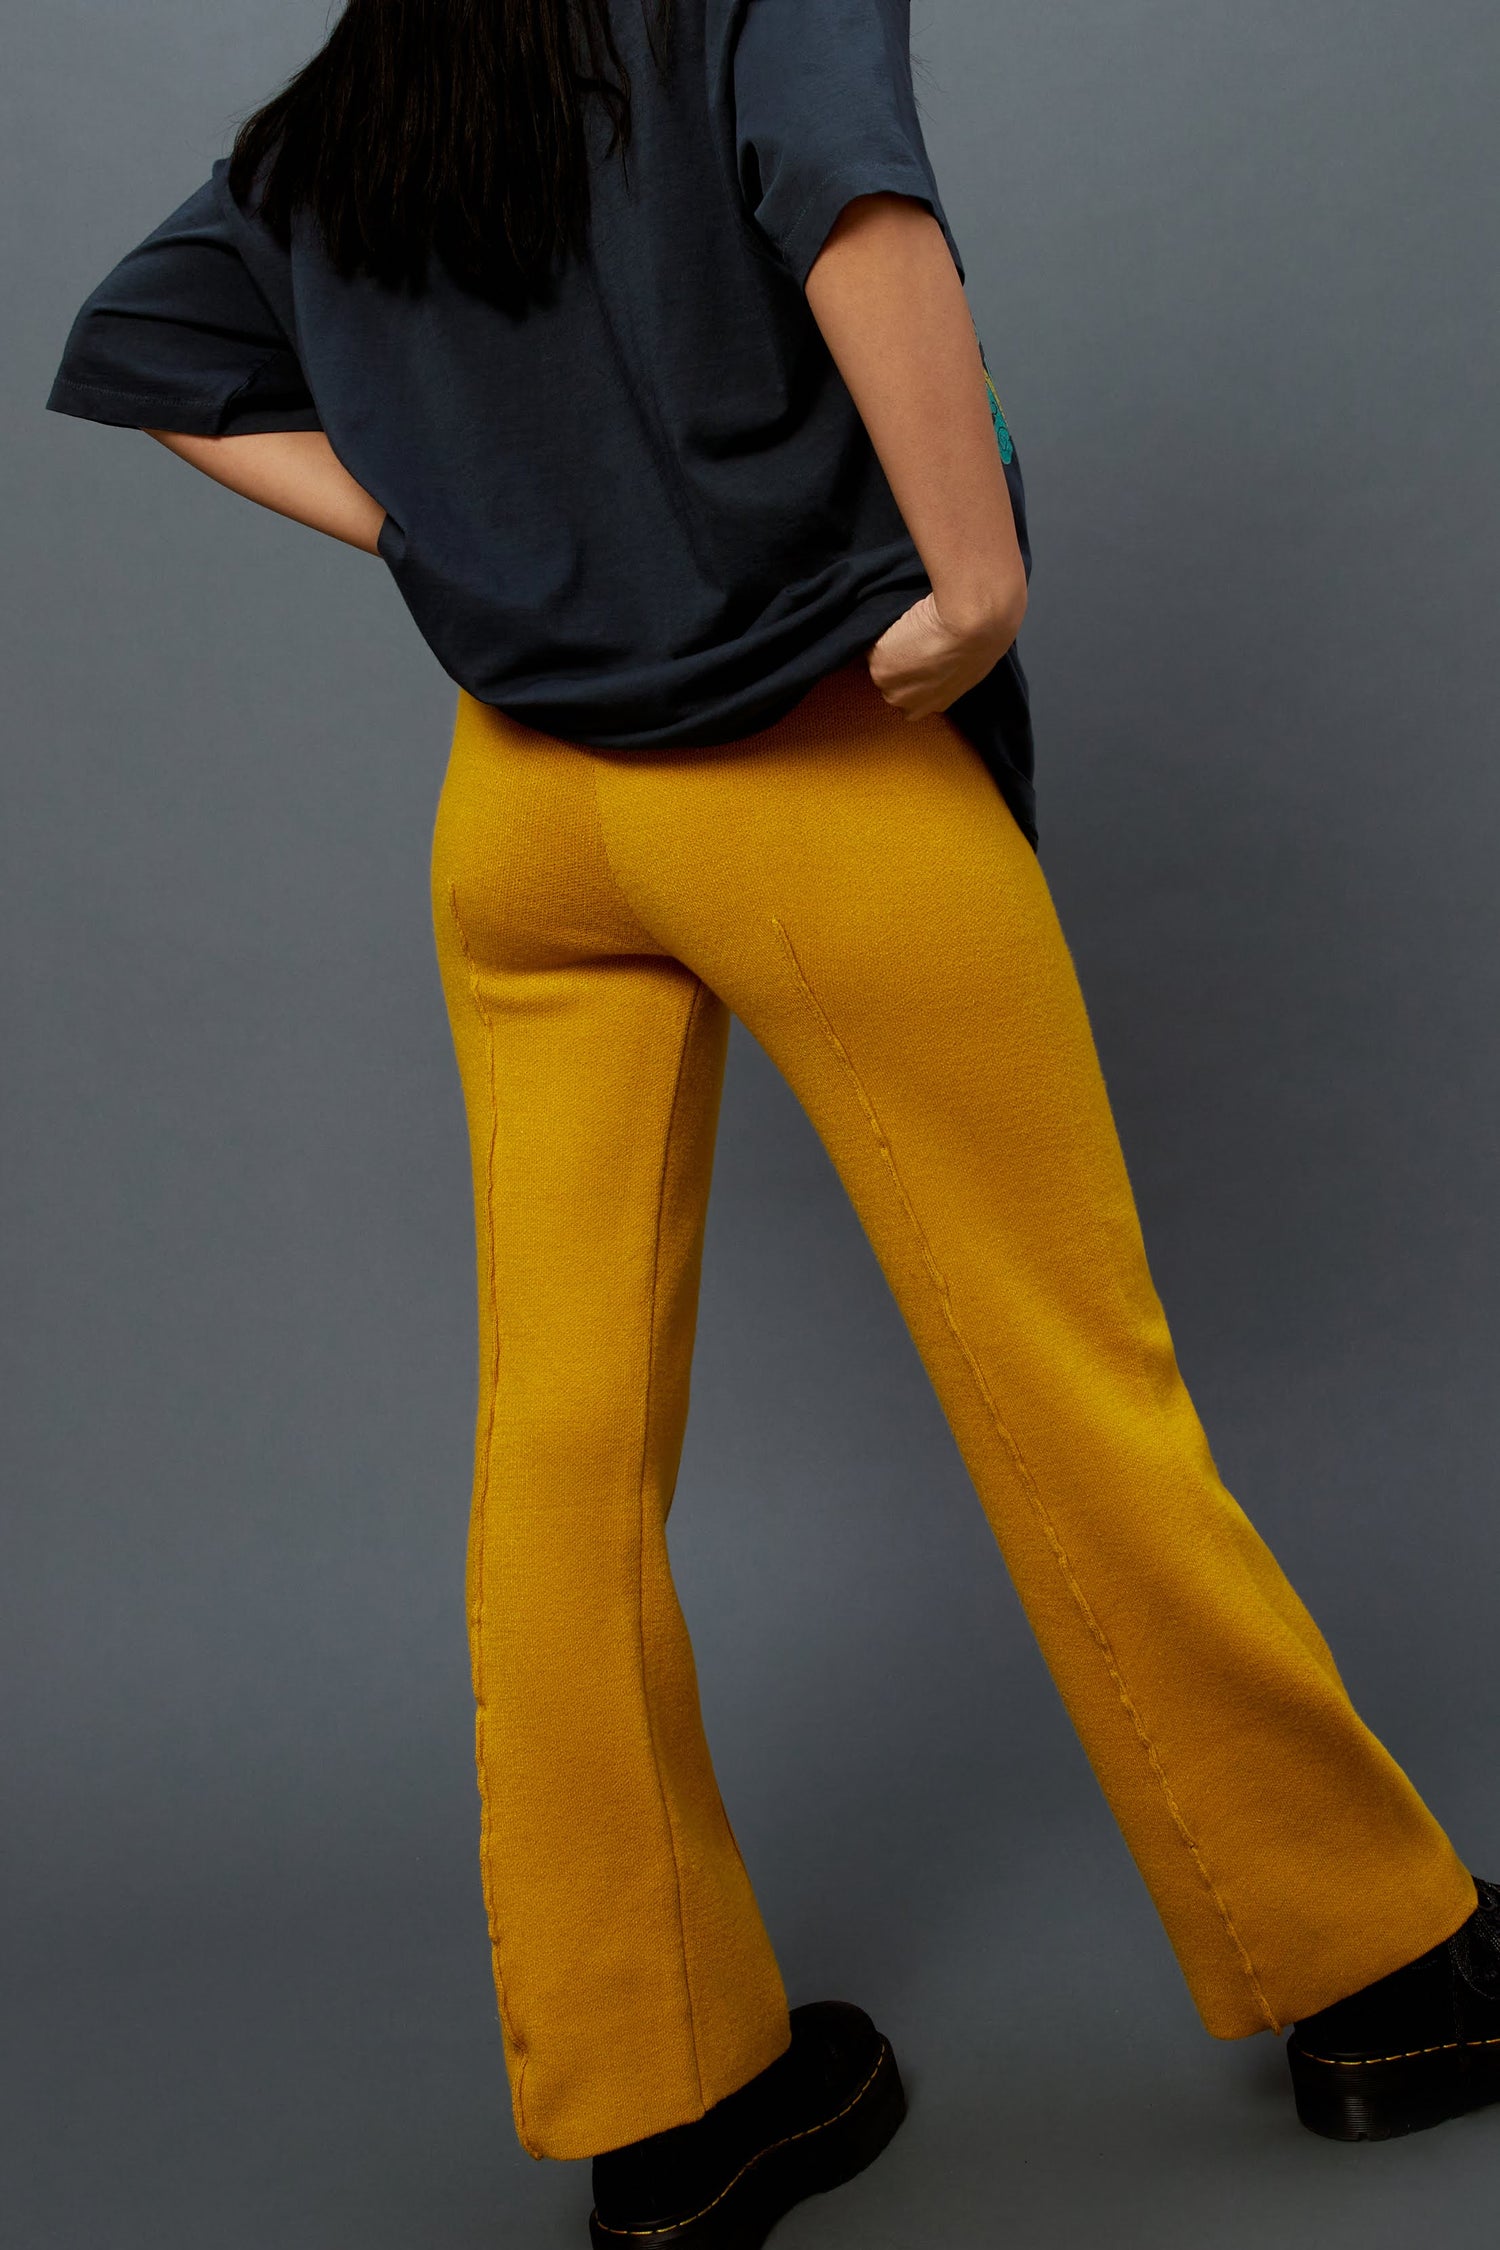 Model wearing knit pintuck pants in gold